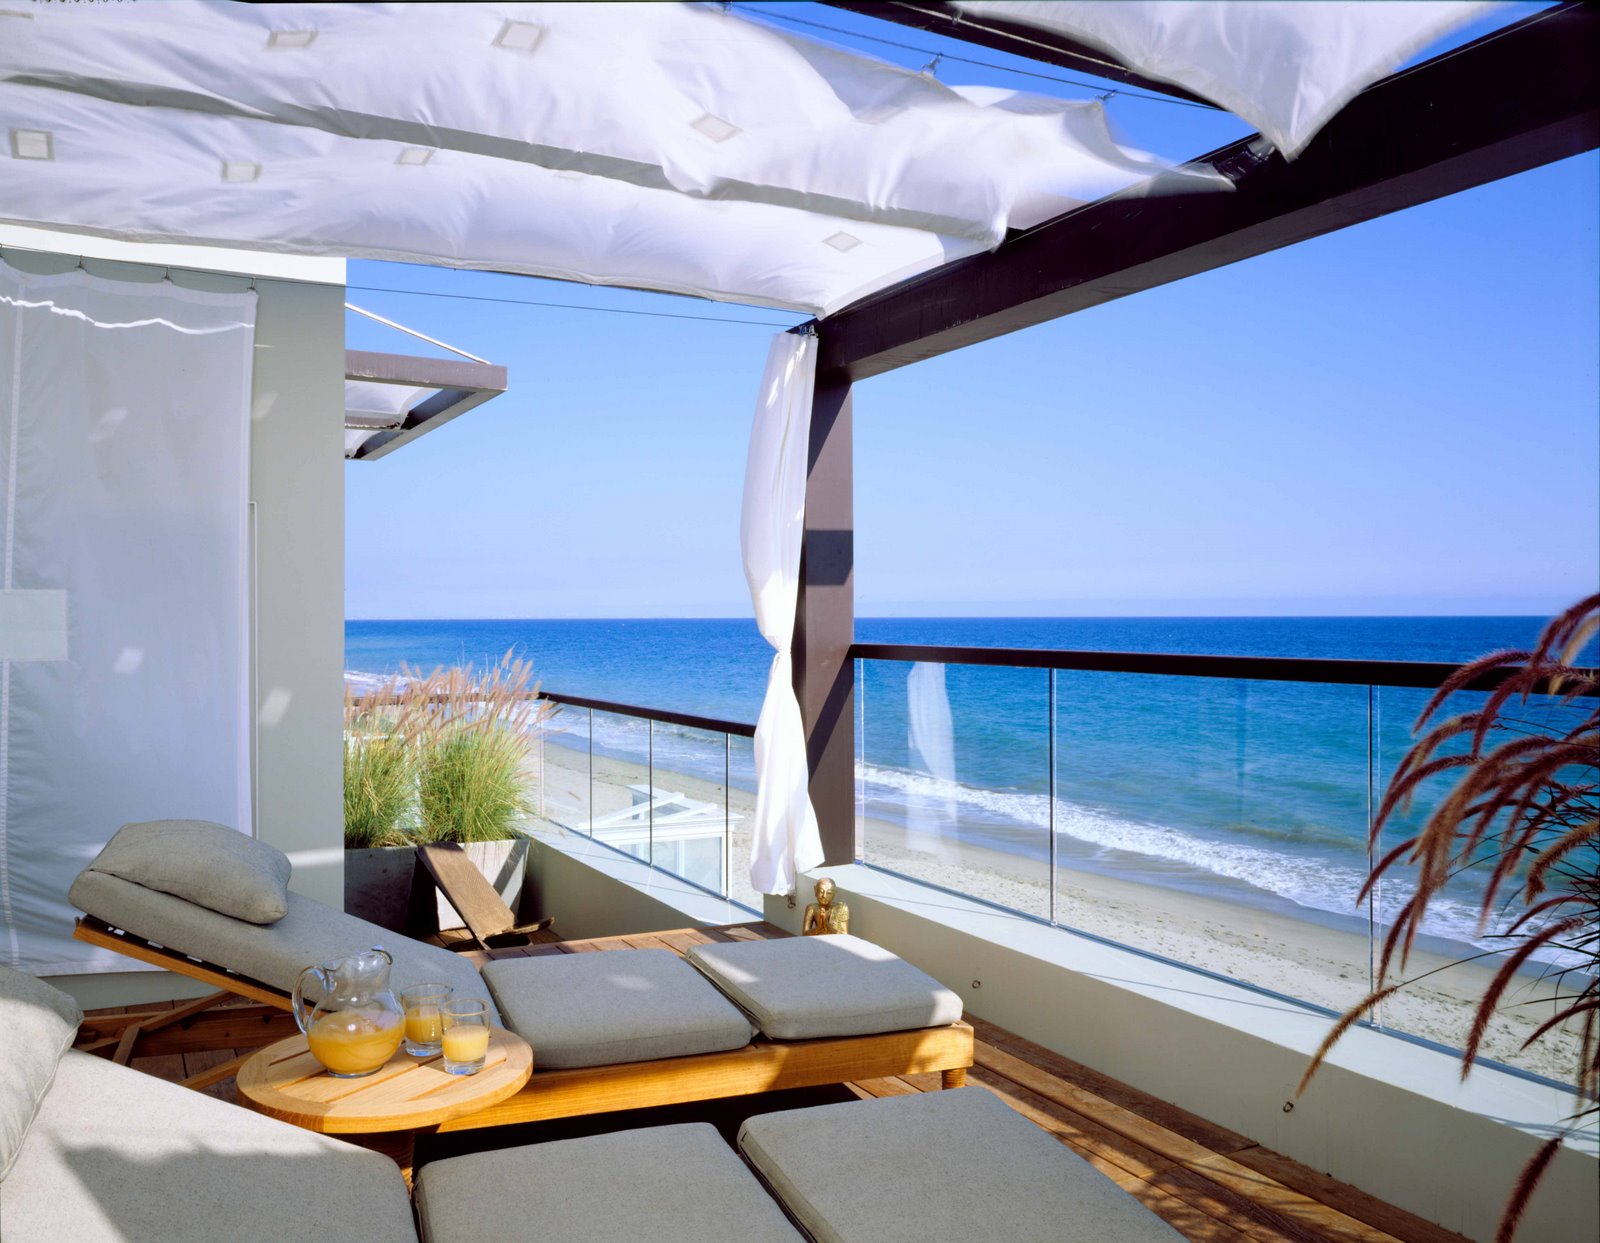 Beach house terrace in Malibu